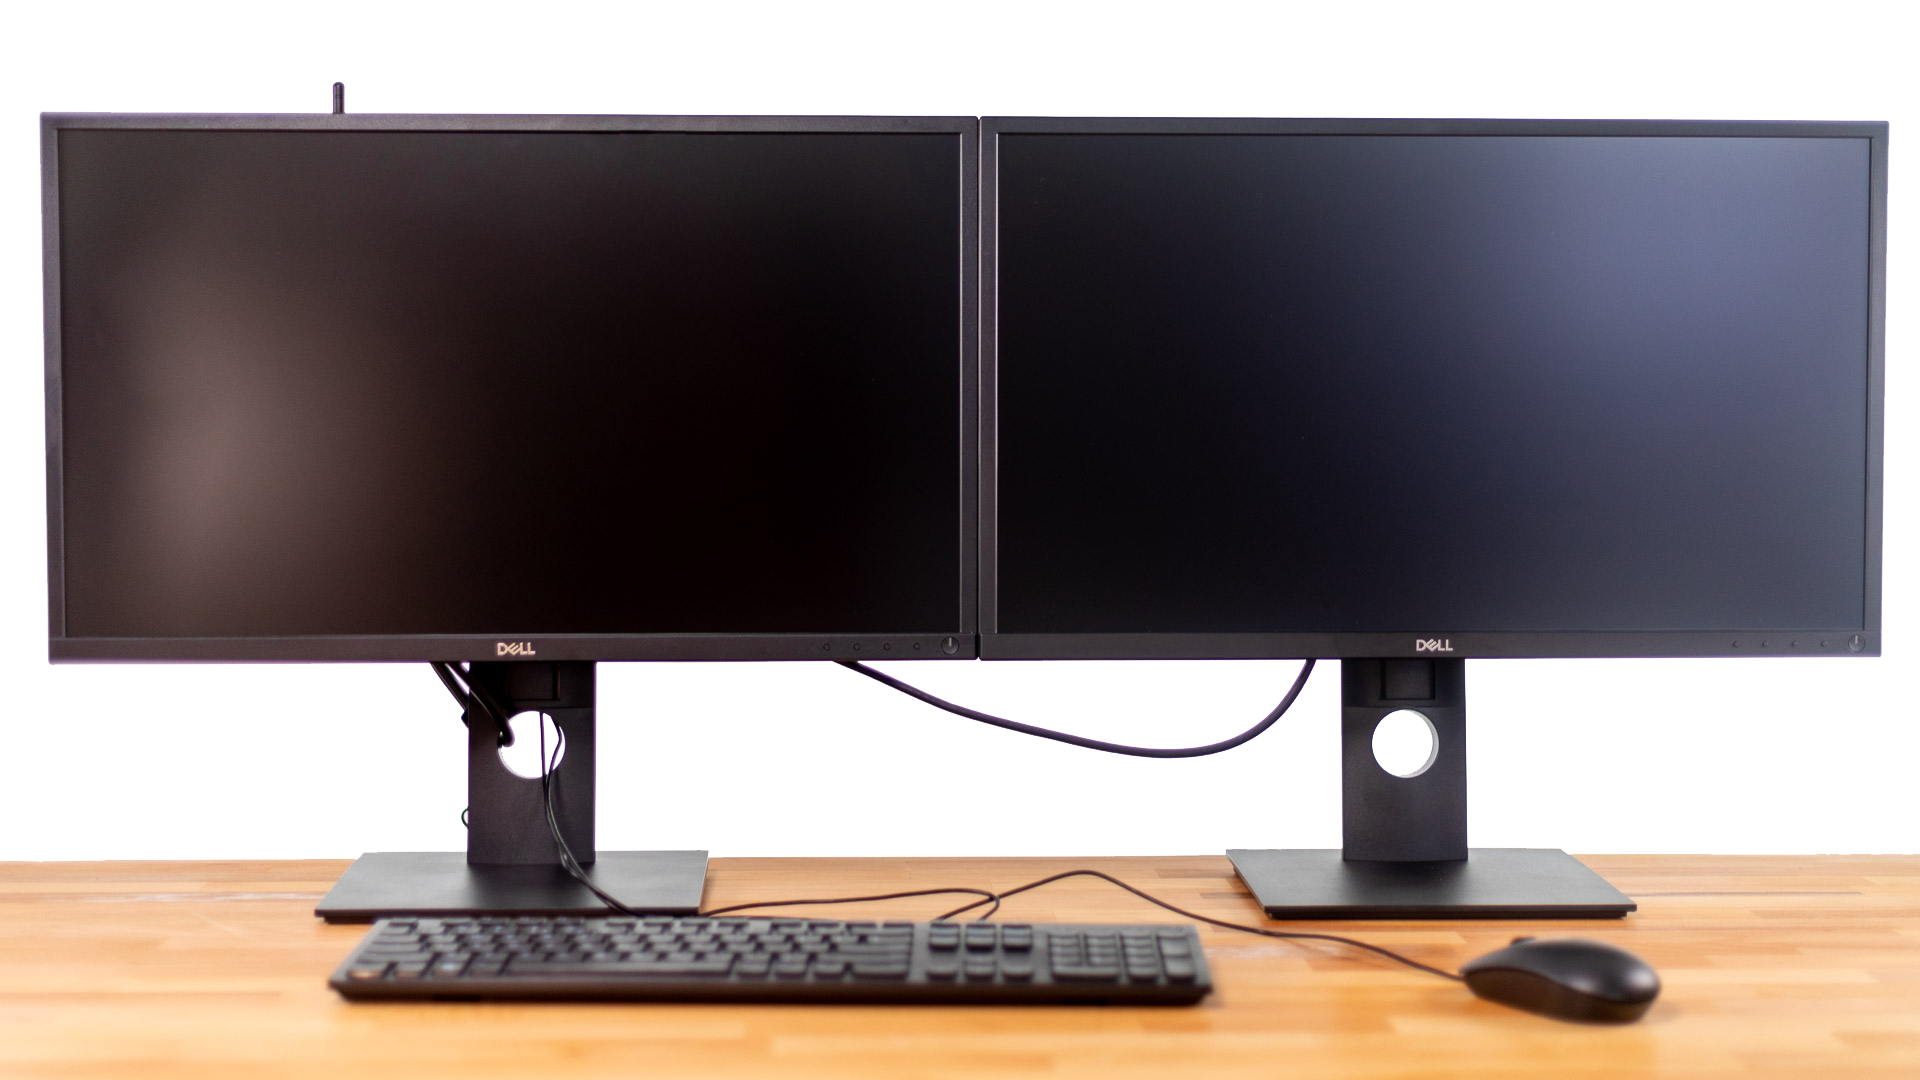 Werkplek opstelling met twee Dell monitoren met daarachter een kleine Dell Optiplex 3080